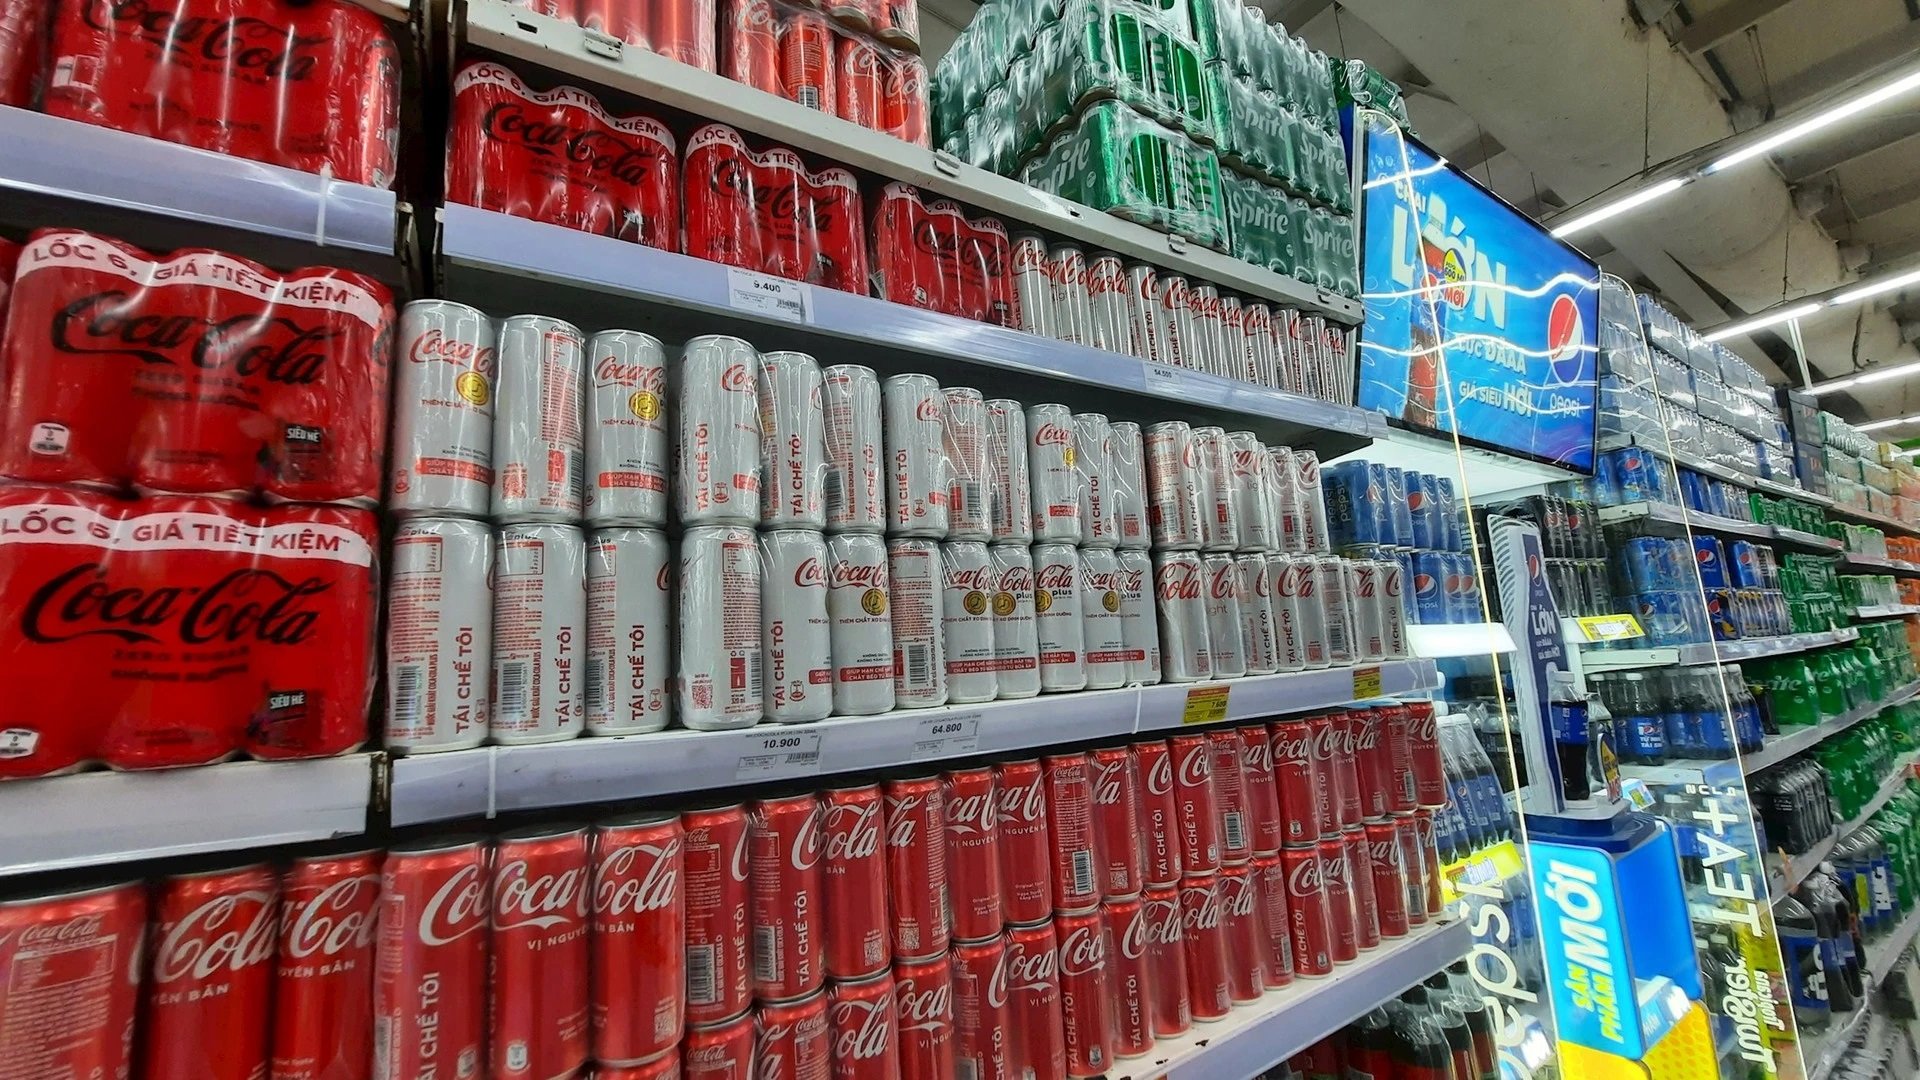 Coca-Cola cans on a supermarket shelf in Hanoi. Photo courtesy of Mekong ASEAN magazine.